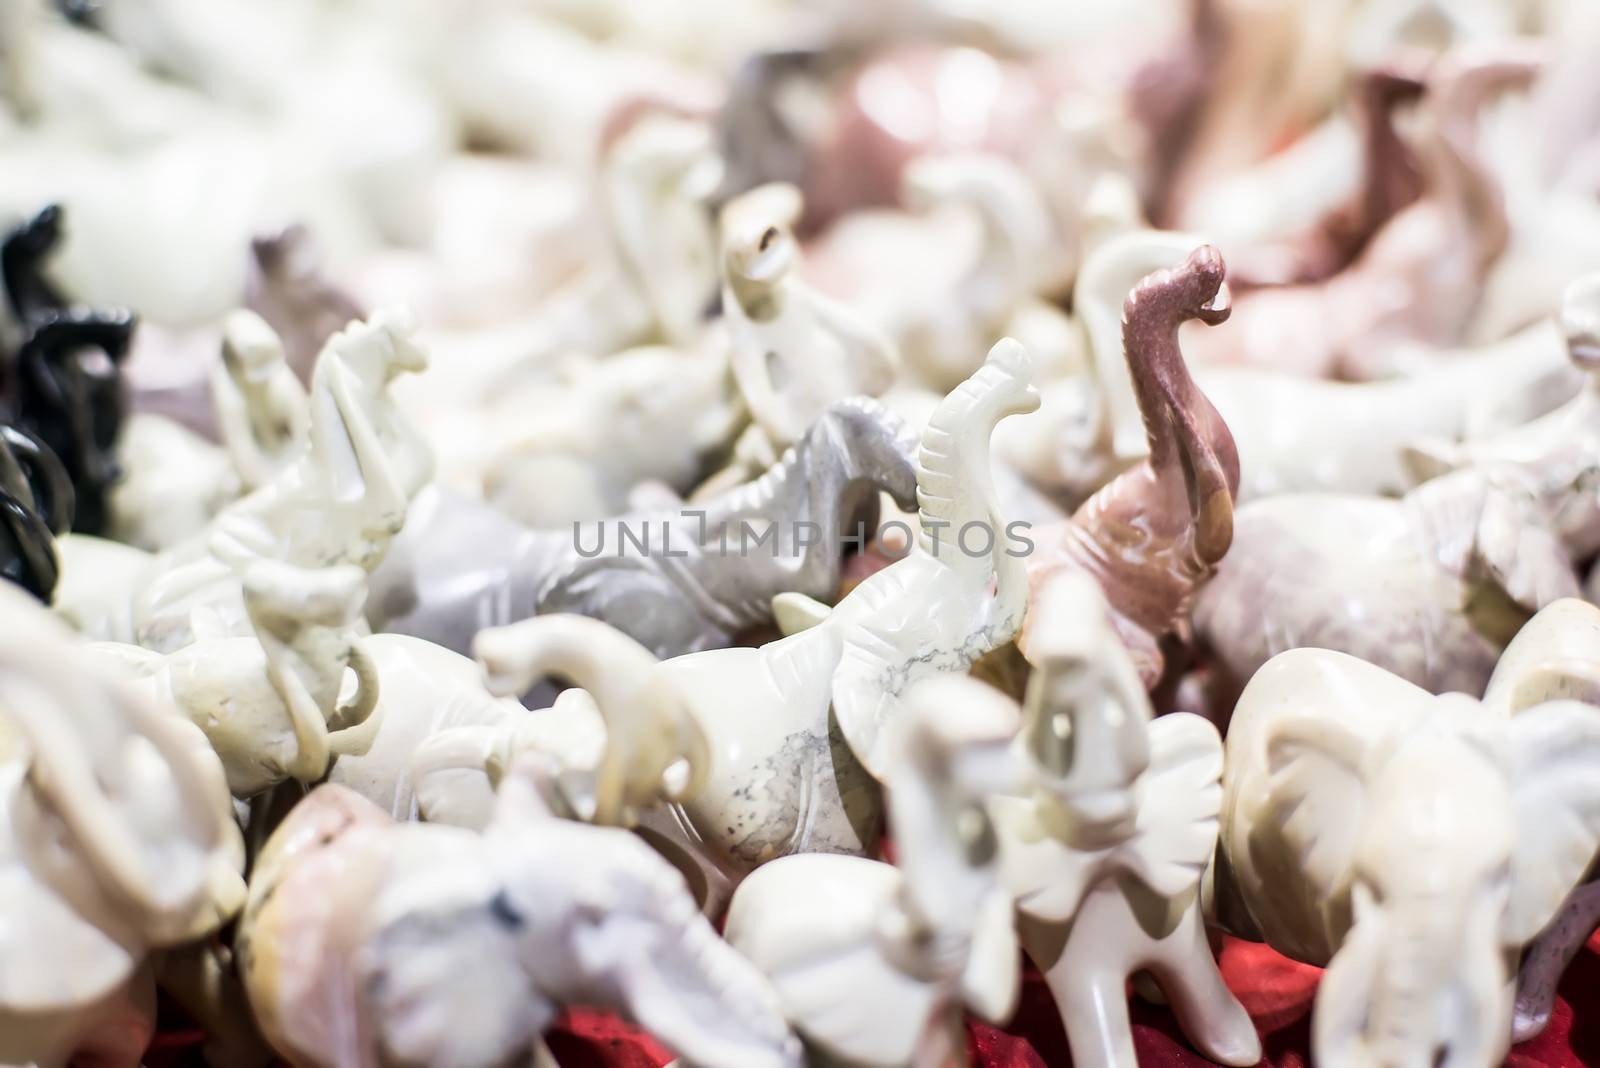 White figurines of an elephant